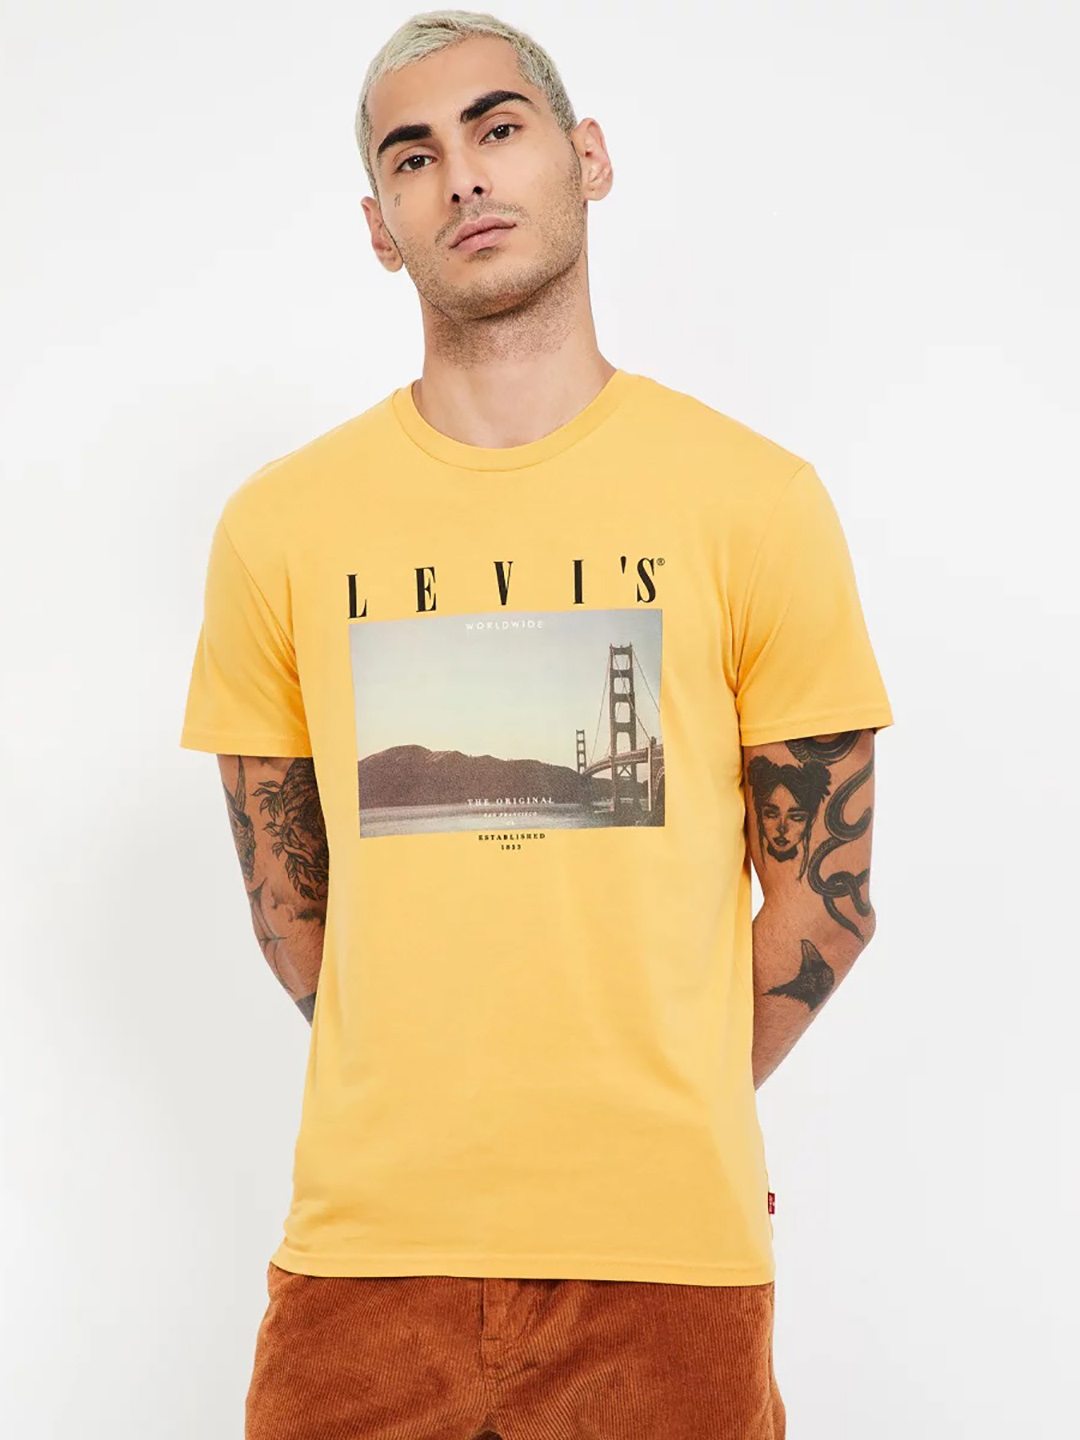 levis shirt yellow